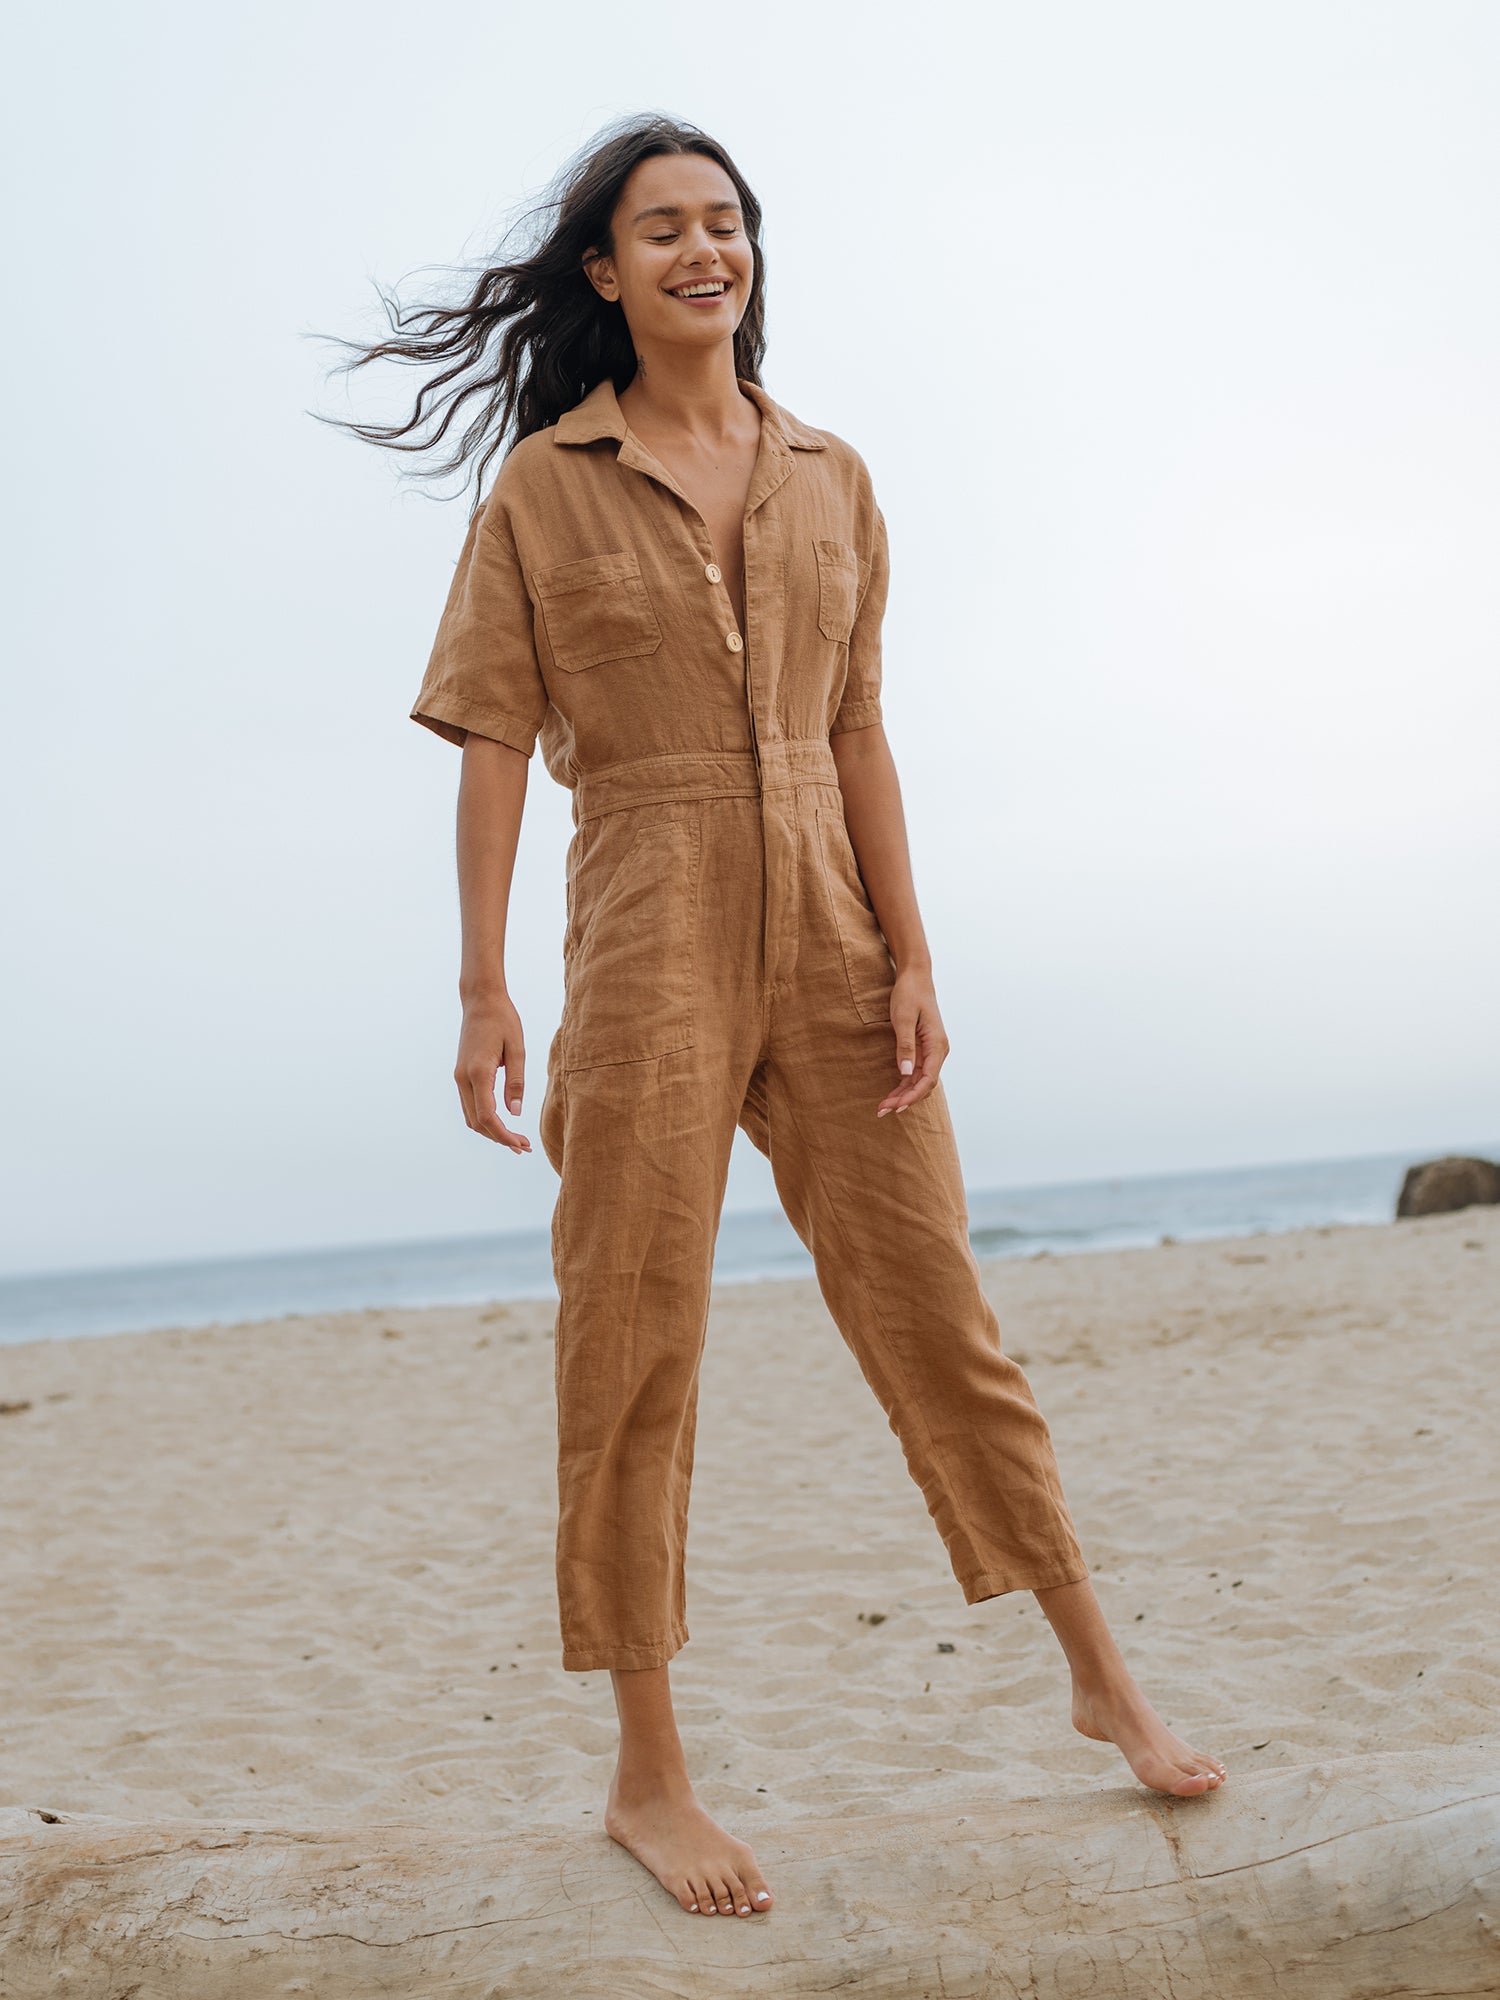 Womens Summer Casual Loose Bib Overalls Cotton Linen Shorts Rompers Solid  Color Jumpsuits Shortalls for Women  Walmartcom